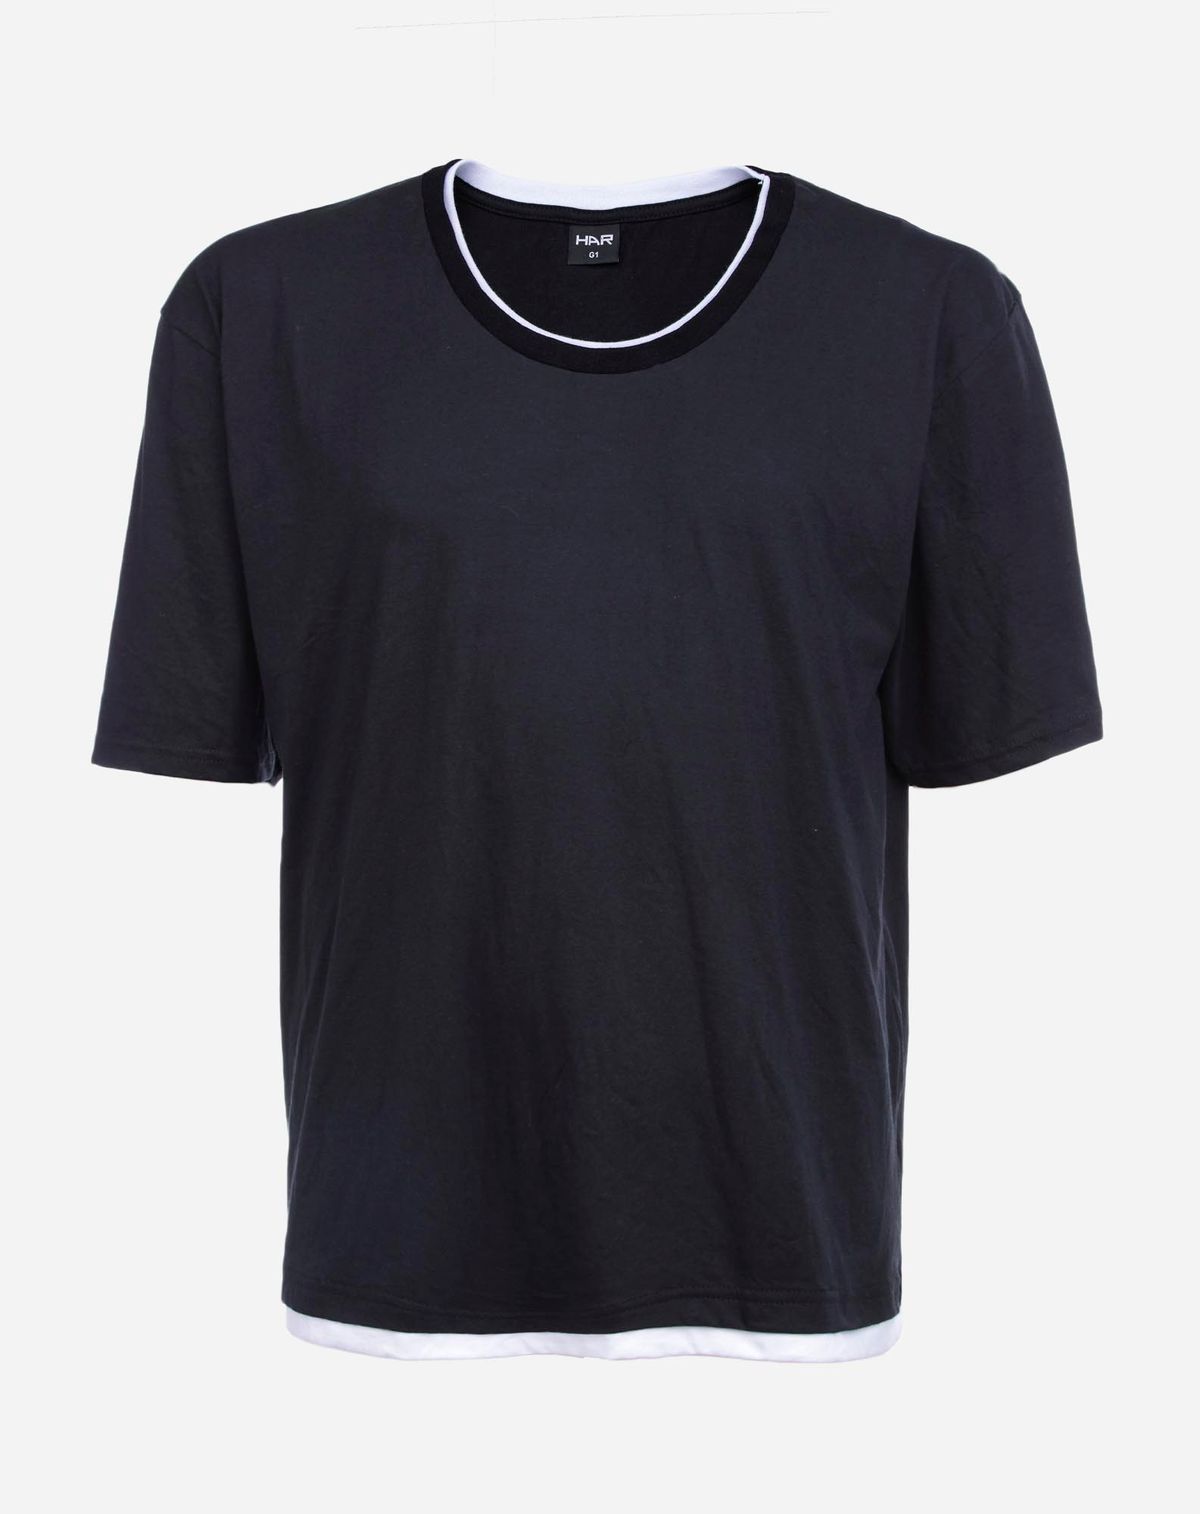 684270004-camiseta-manga-curta-plus-size-masculina-recorte-preto-g1-d83